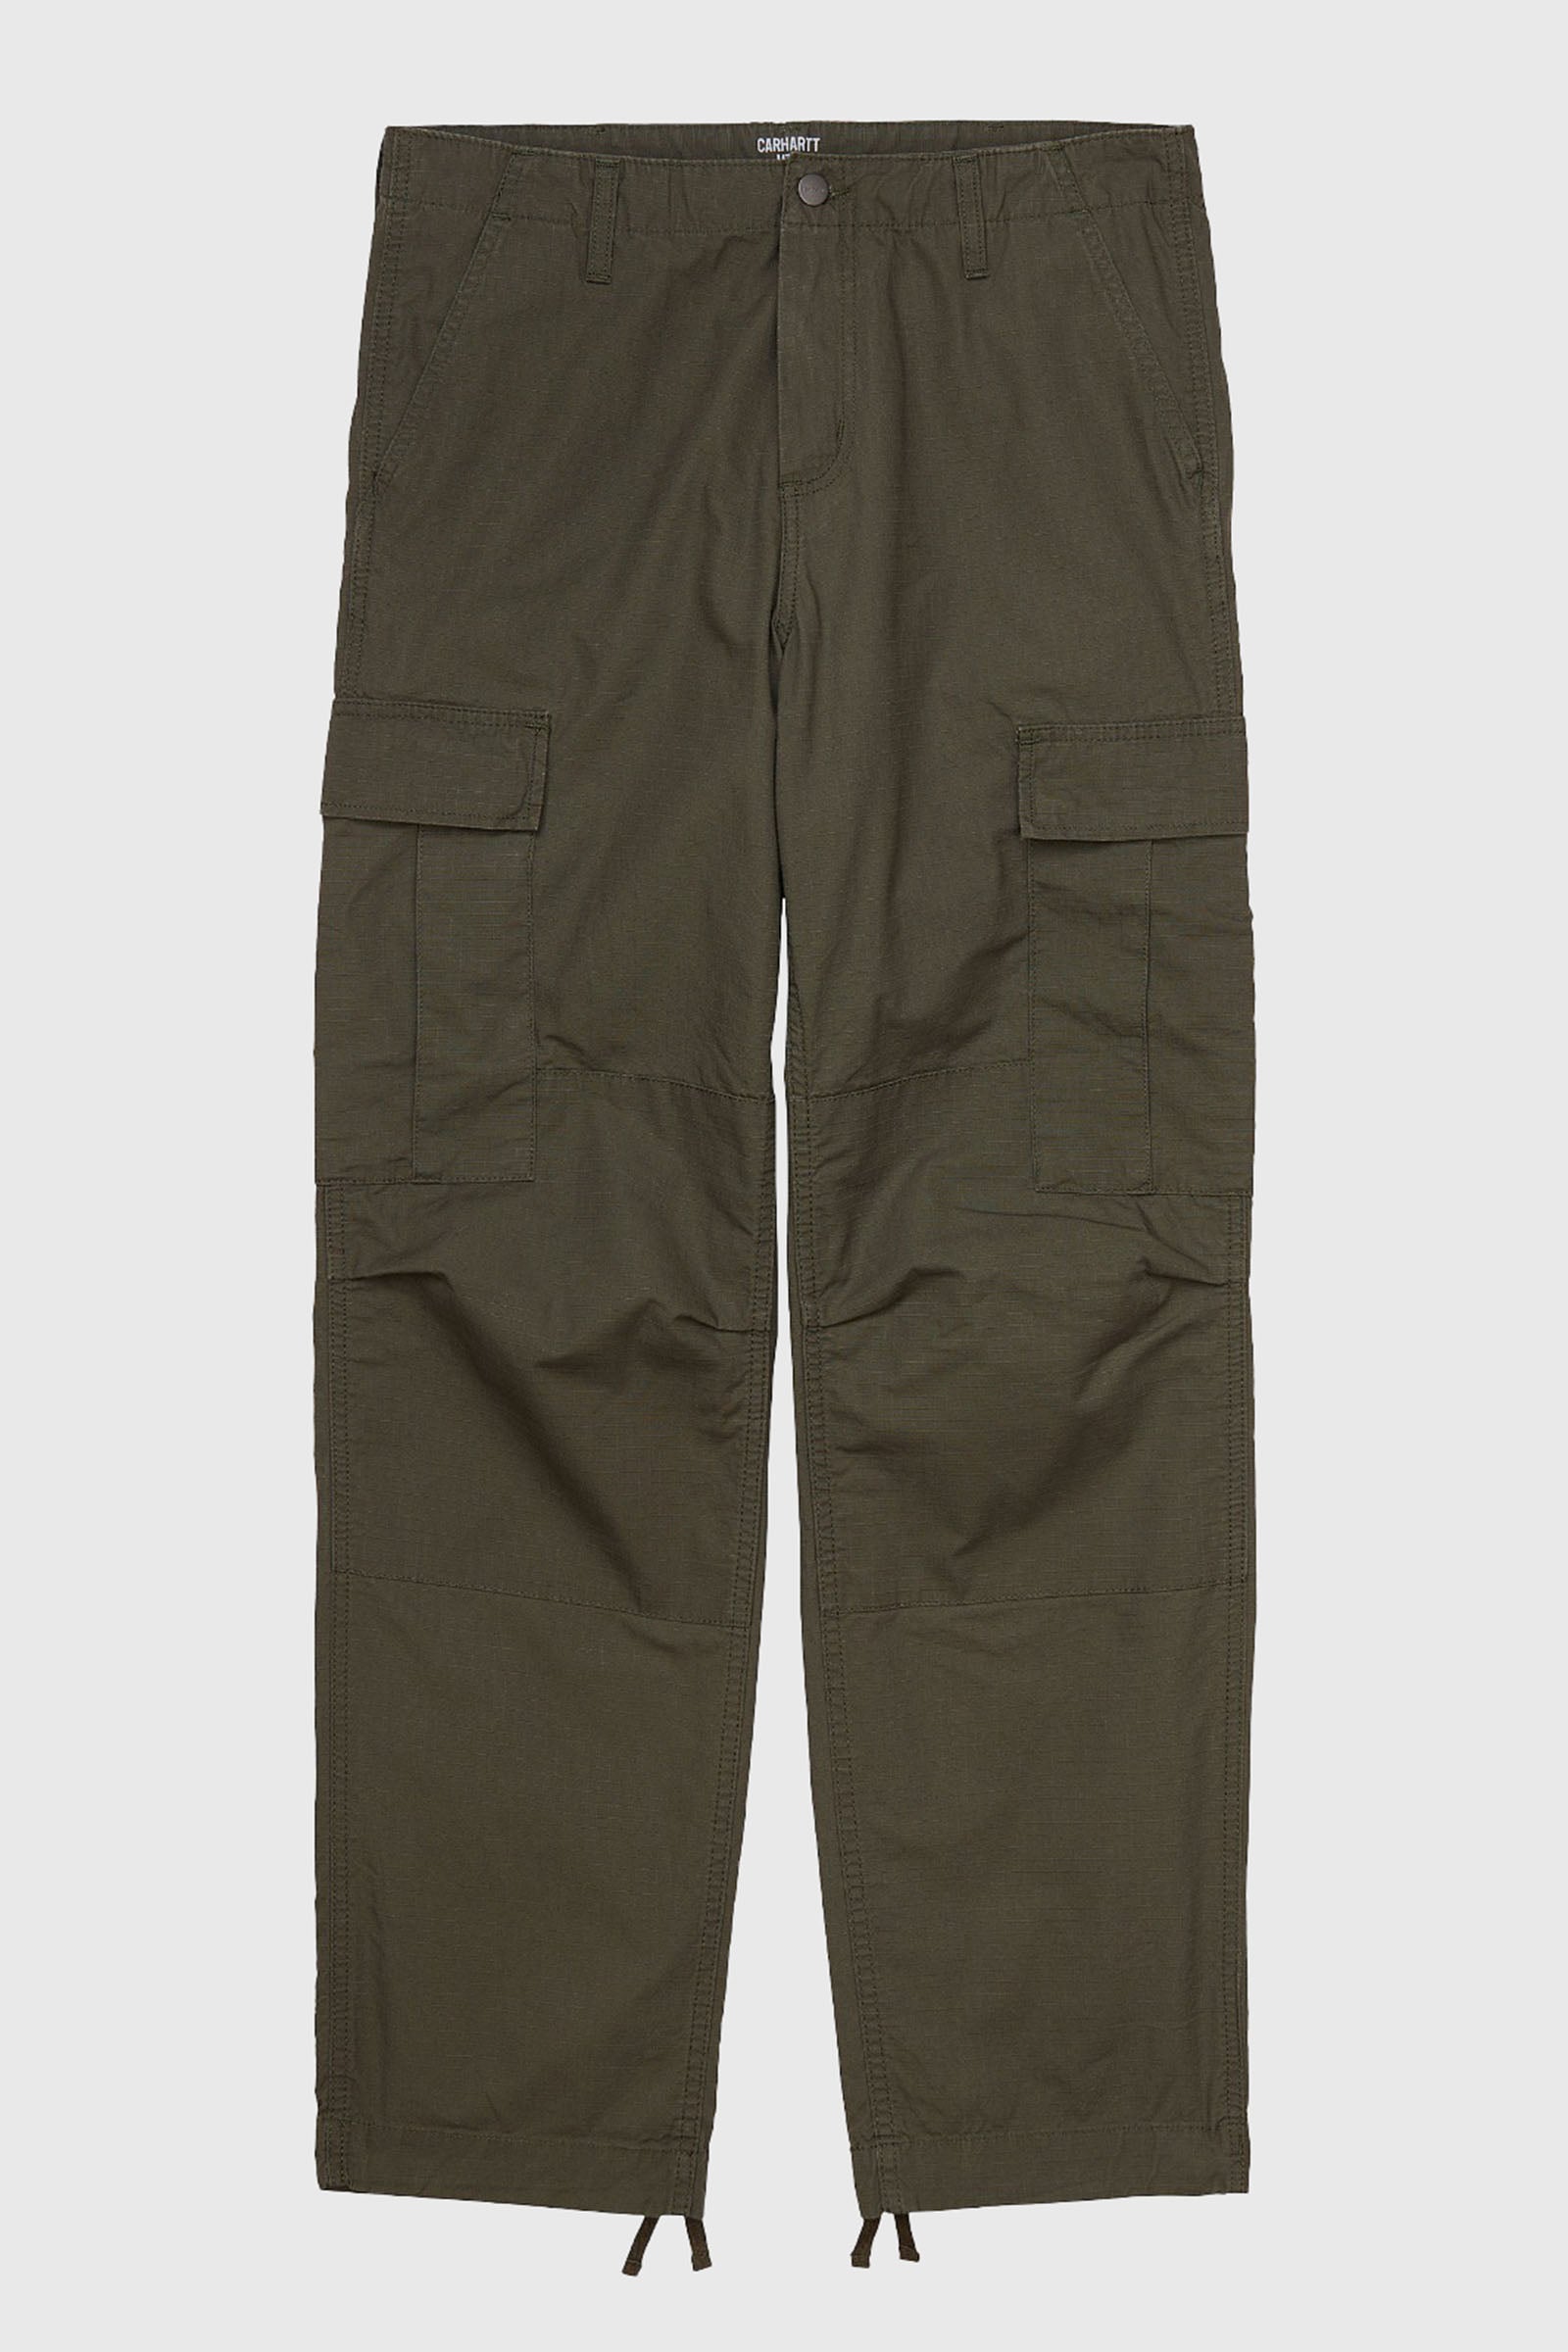 Carhartt Wip Pantalone Regular Cargo Verde Militare - 7